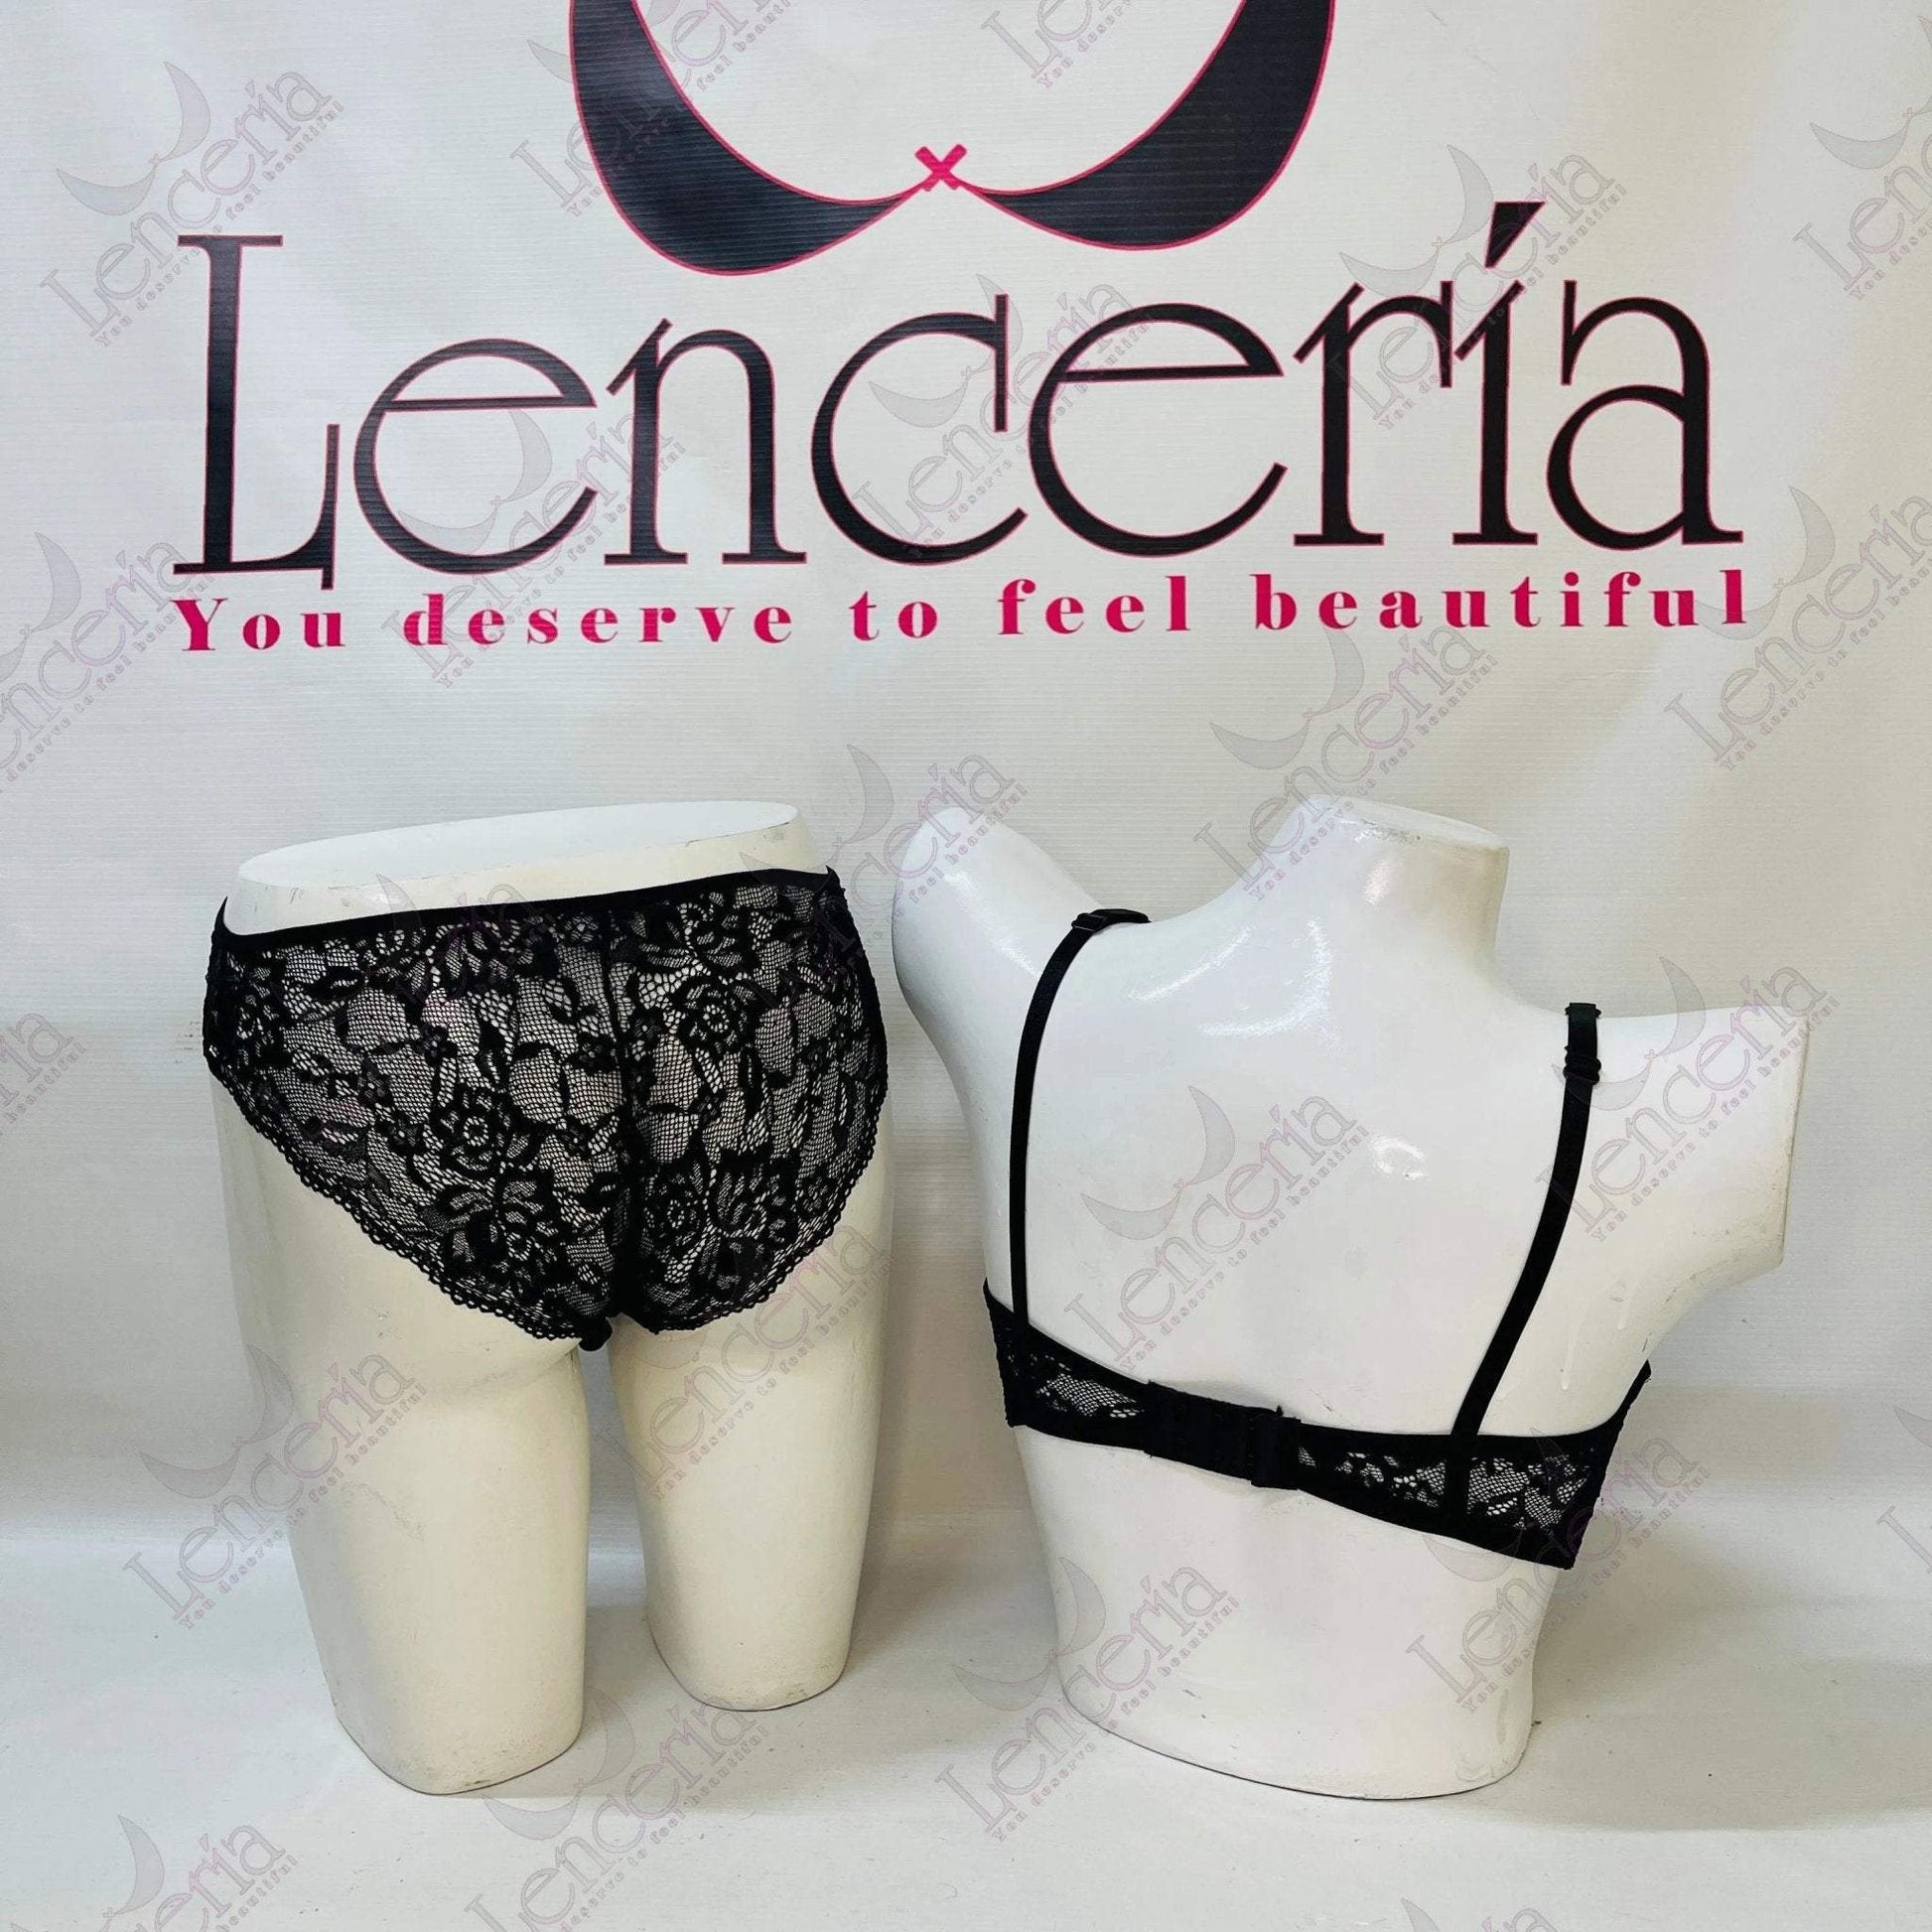 Cheriee nocte velvet & embroidered lingerie set - extremely beautiful (c73) Lenceria.pk Pakistan